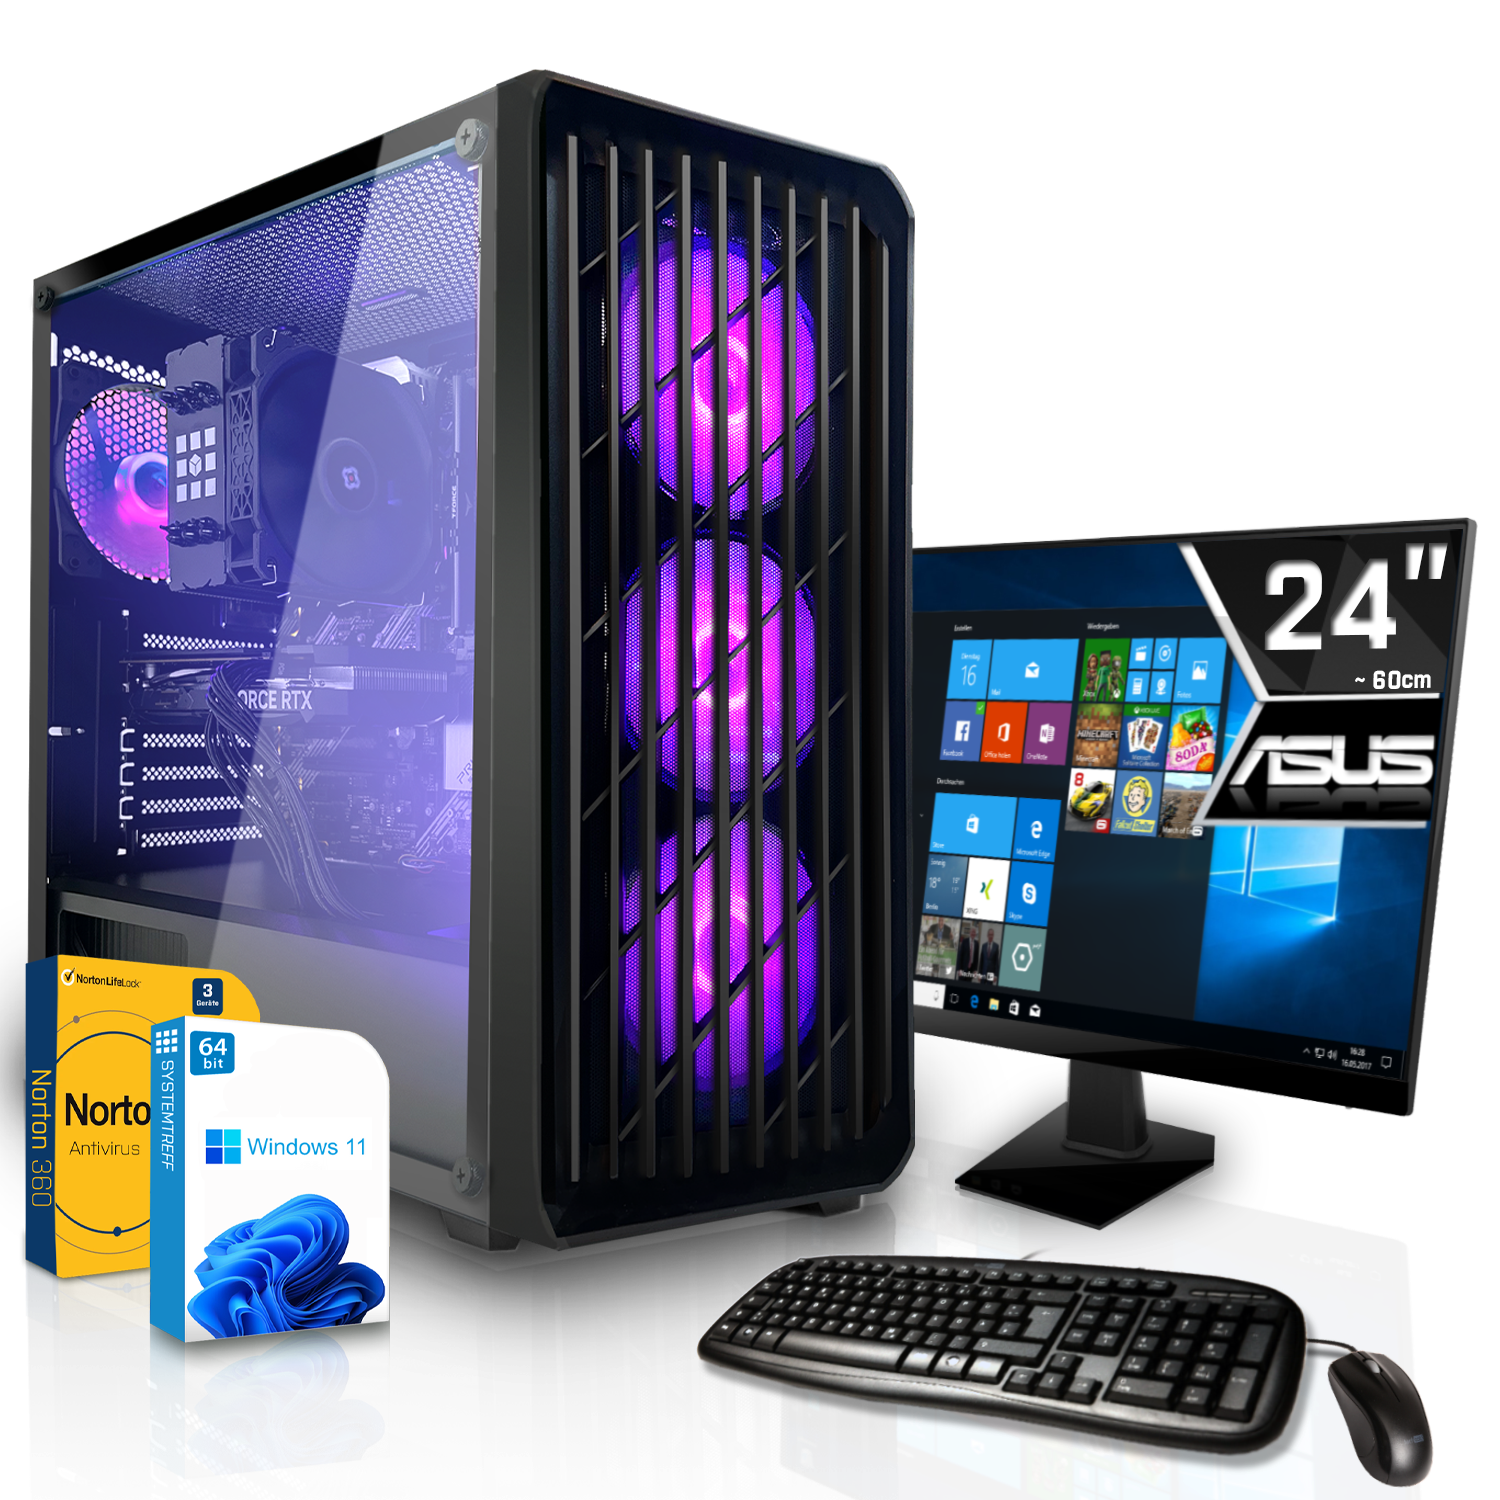 SYSTEMTREFF Gaming Komplett GB Core, RAM, GB 5 Ryzen 5600G, 7 PC GB AMD AMD 512 - RX mit SSD, 8 Vega Komplett 4 Prozessor, Radeon 5600G